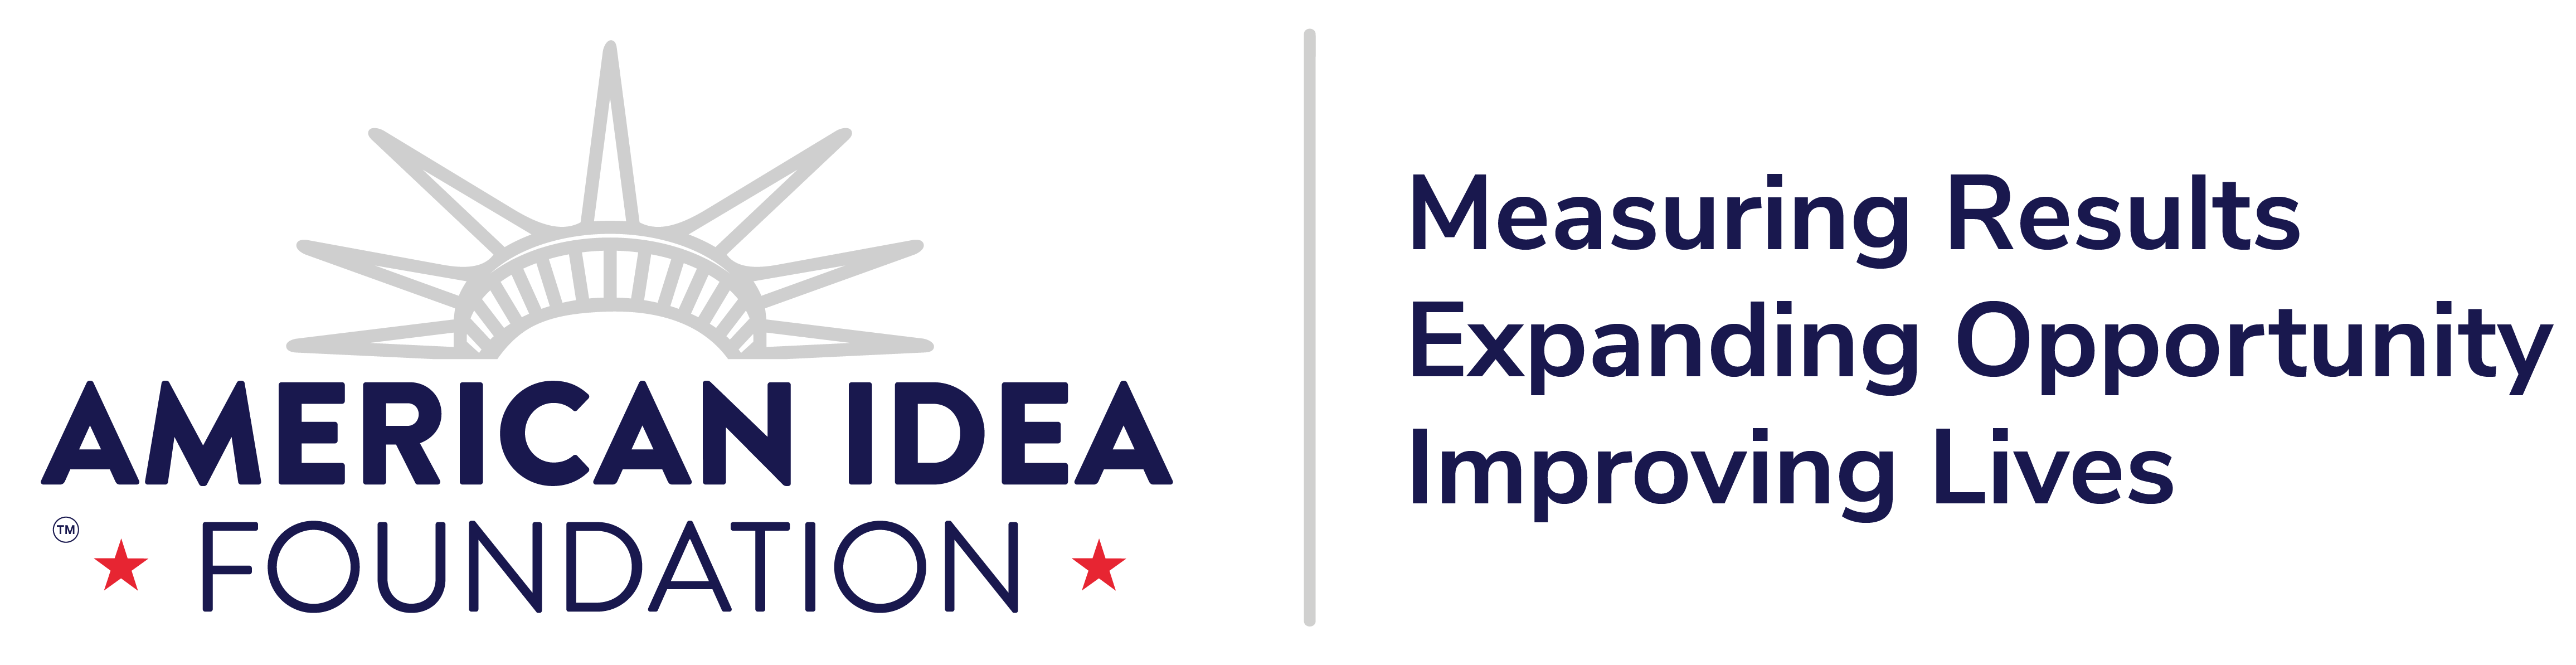 American Idea Foundation